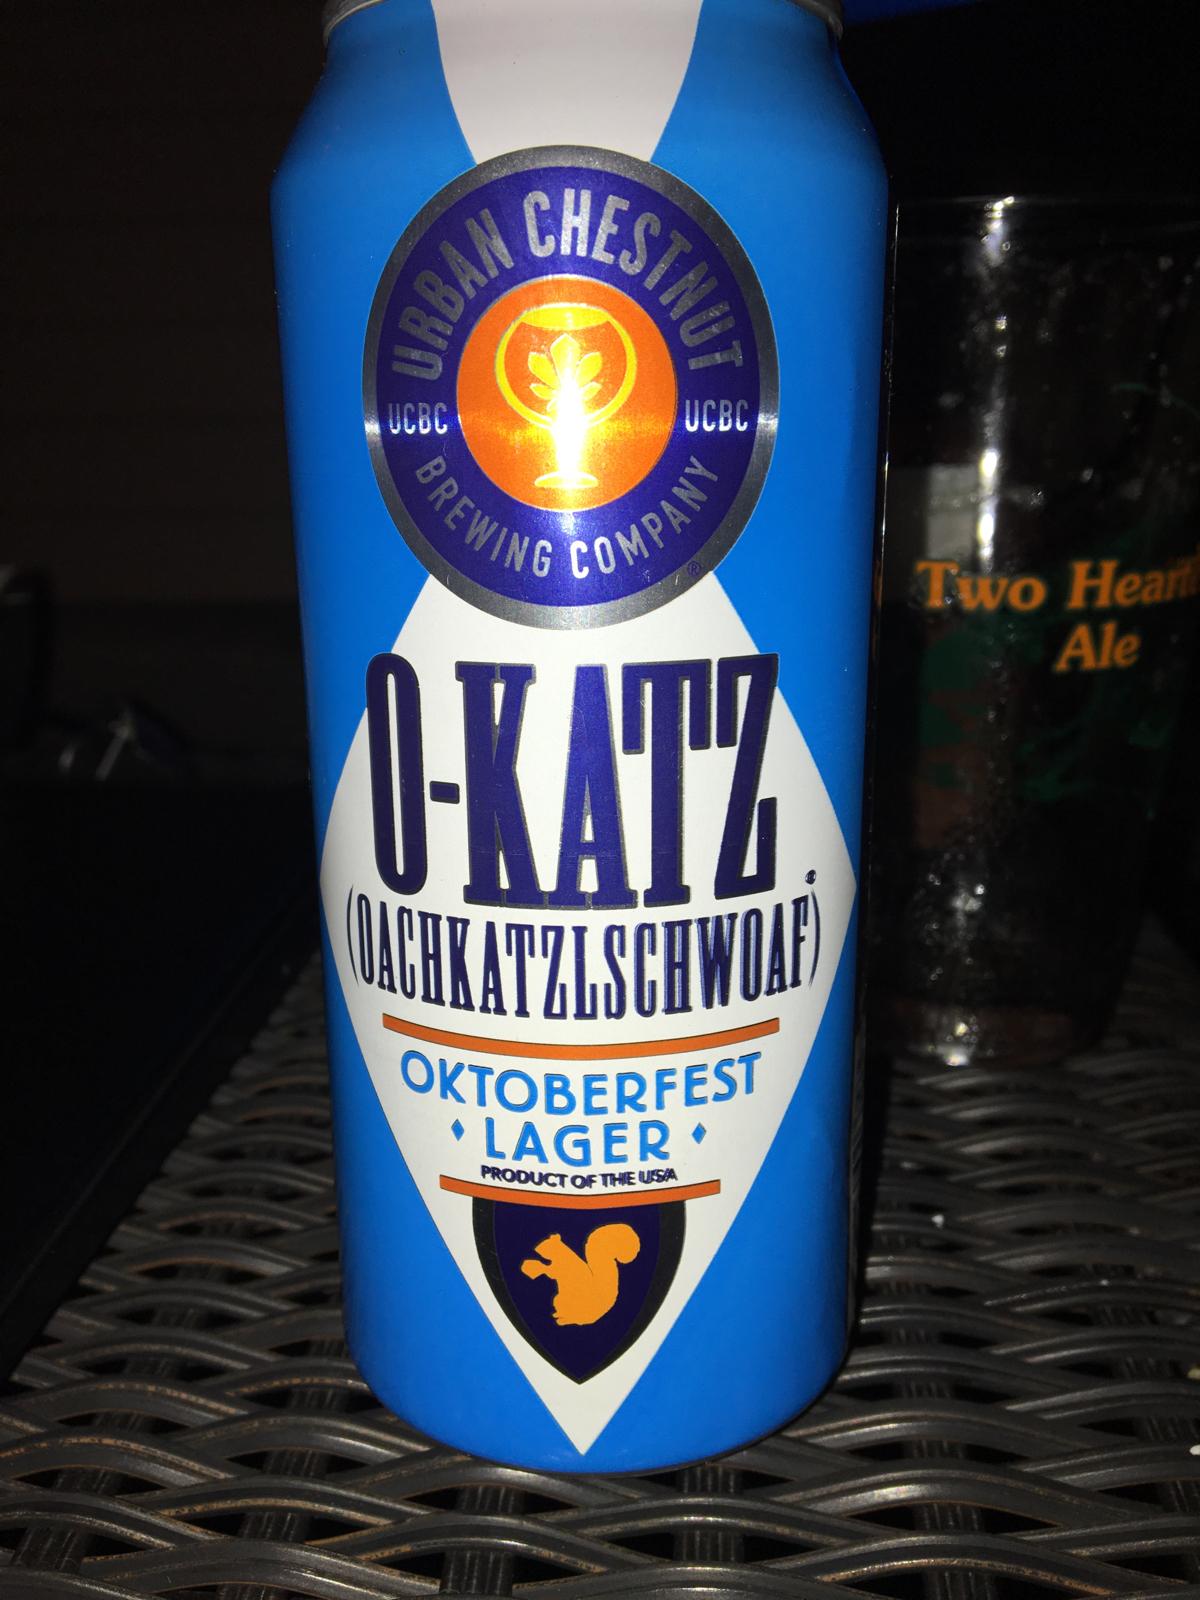 O-Katz (Oachkatzlschwoaf)